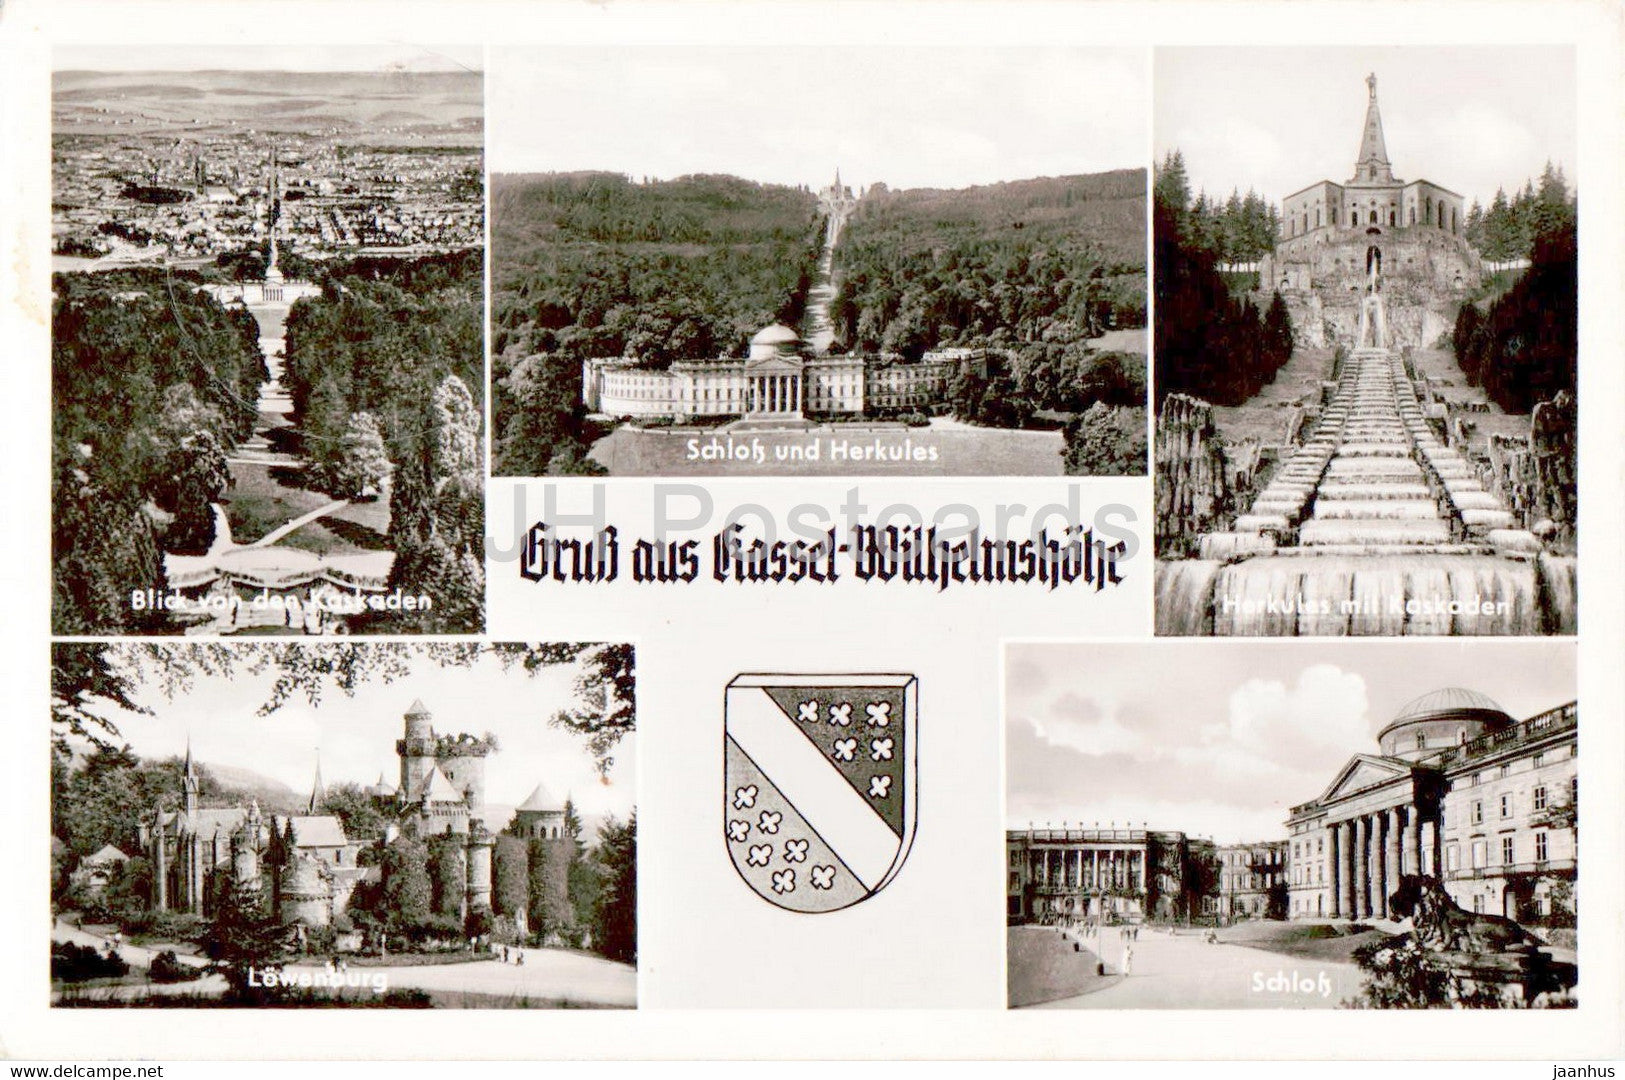 Gruss aus Kassel Wilhelmshohe - Lowenburg - Schloss - old postcard - 1954 - Germany - used - JH Postcards